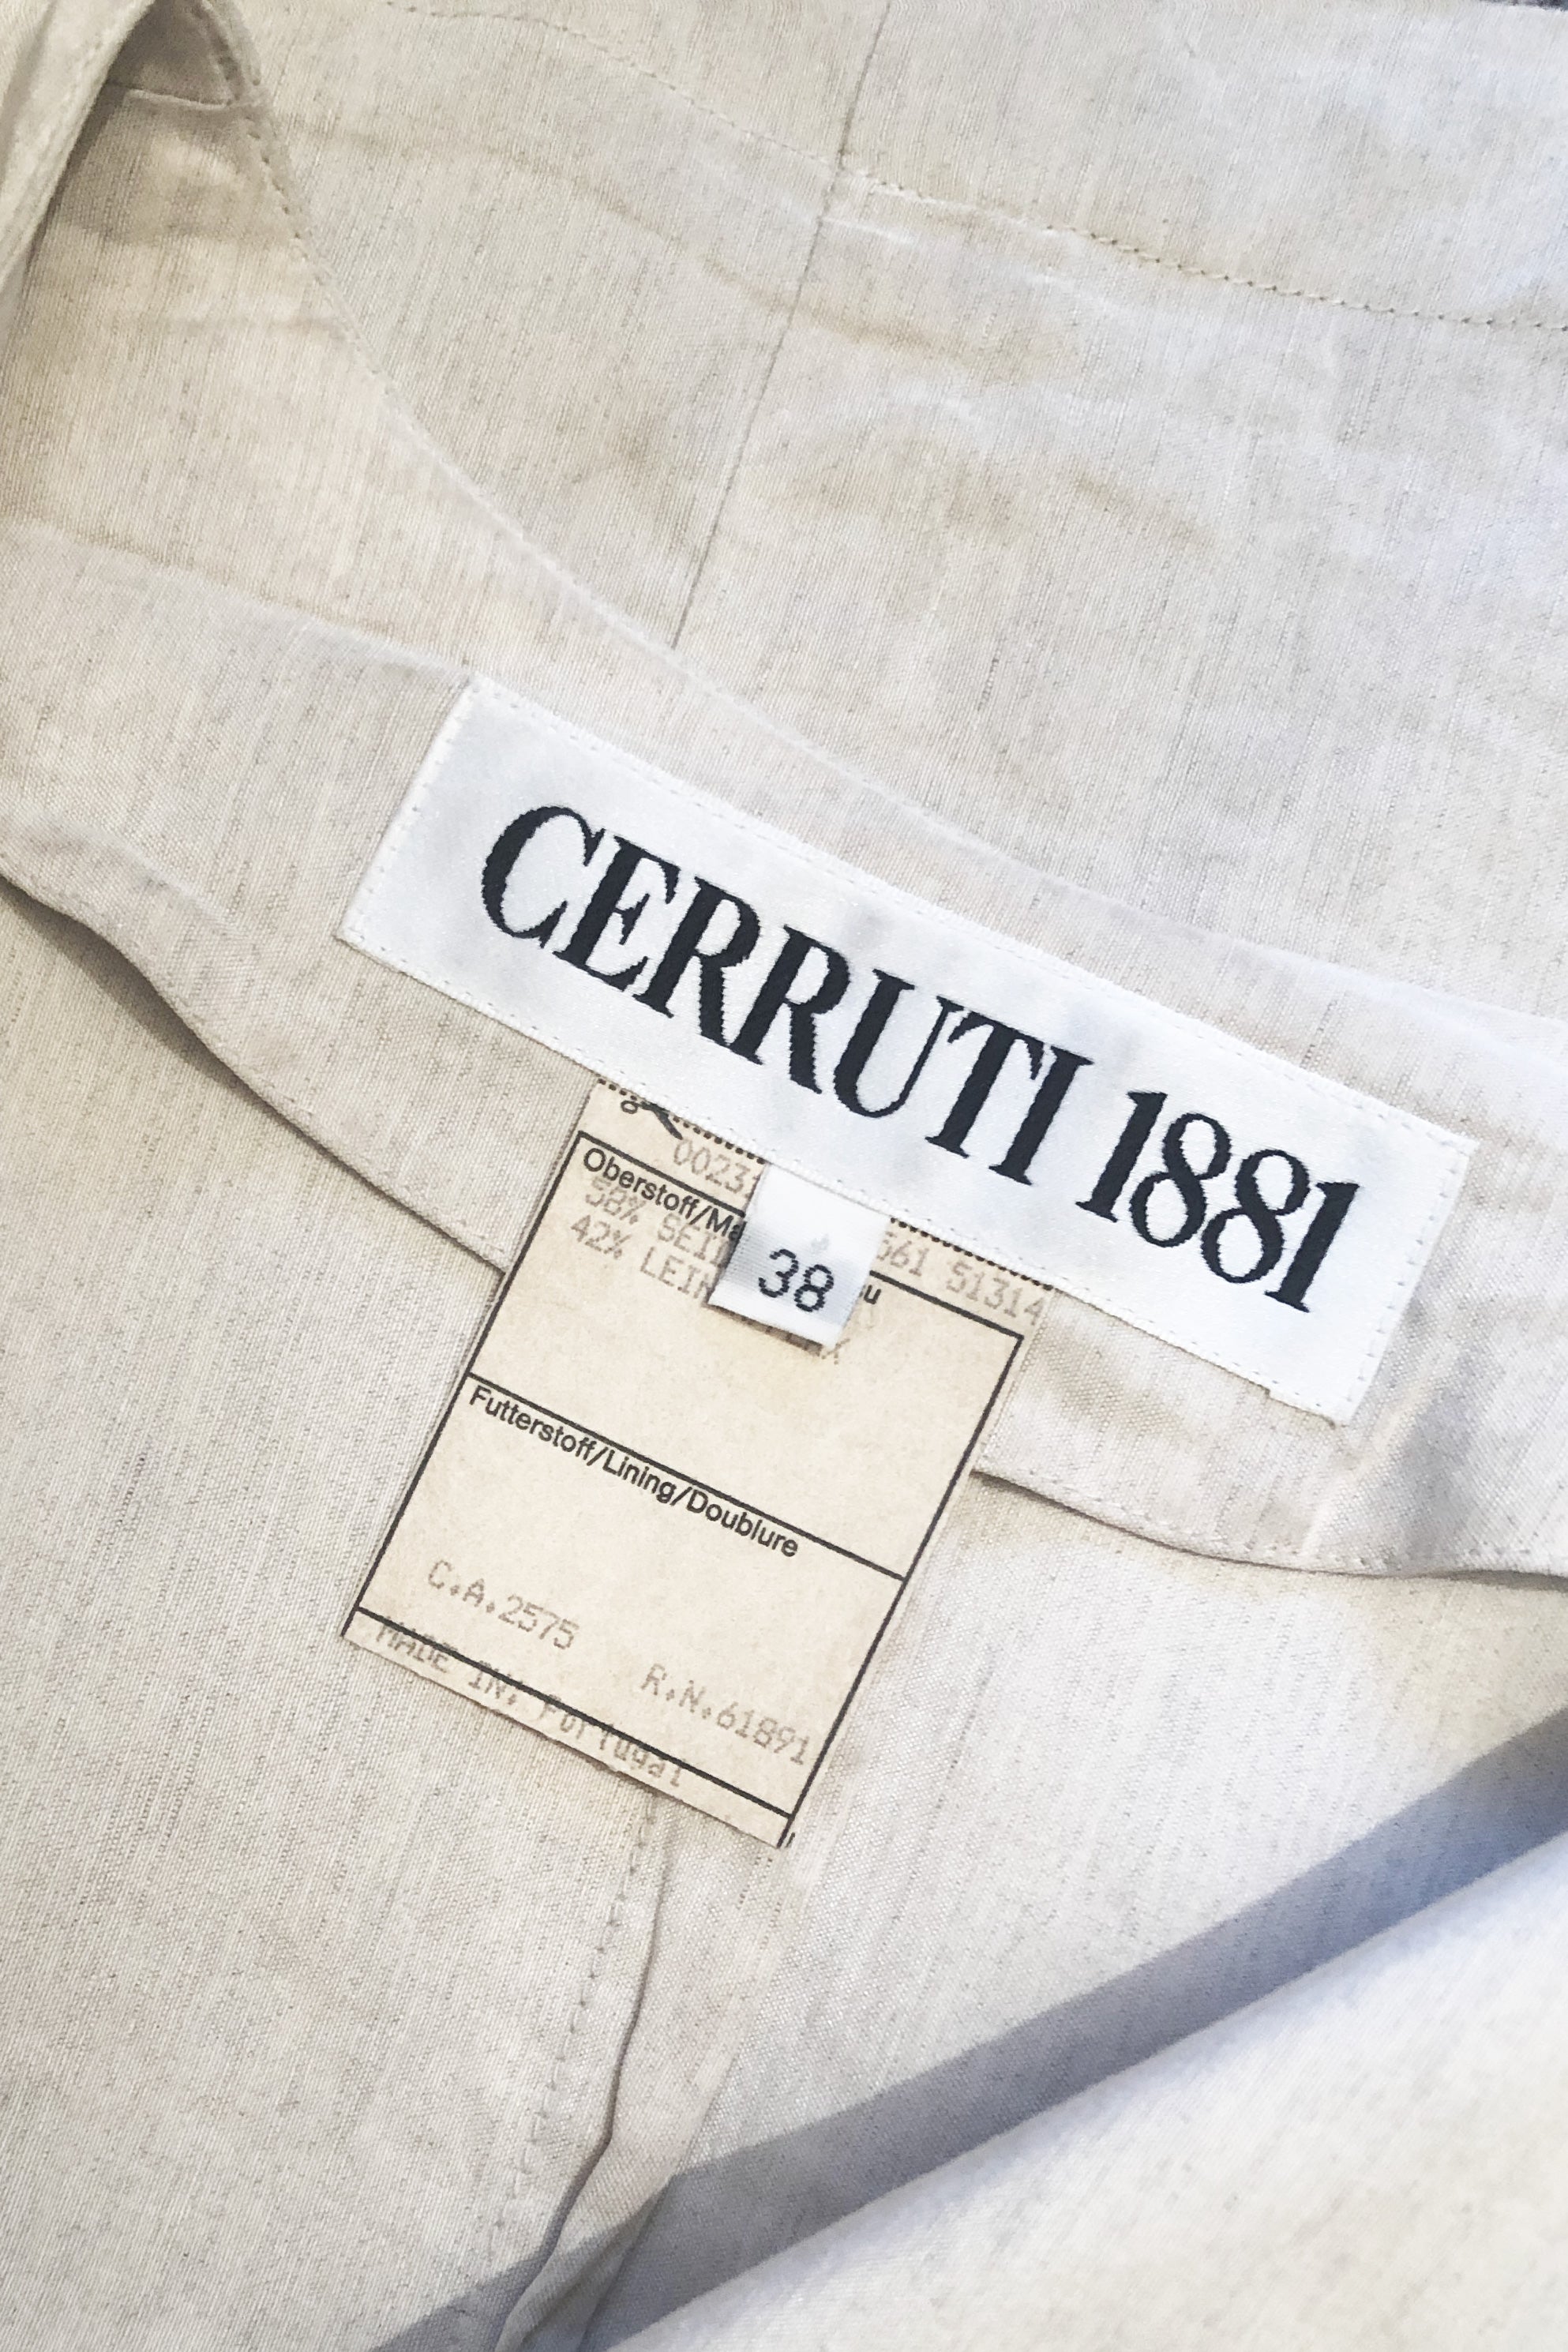 Vintage Cerruti 1881 Oversized Silk Shirt or Jacket Size 8-12